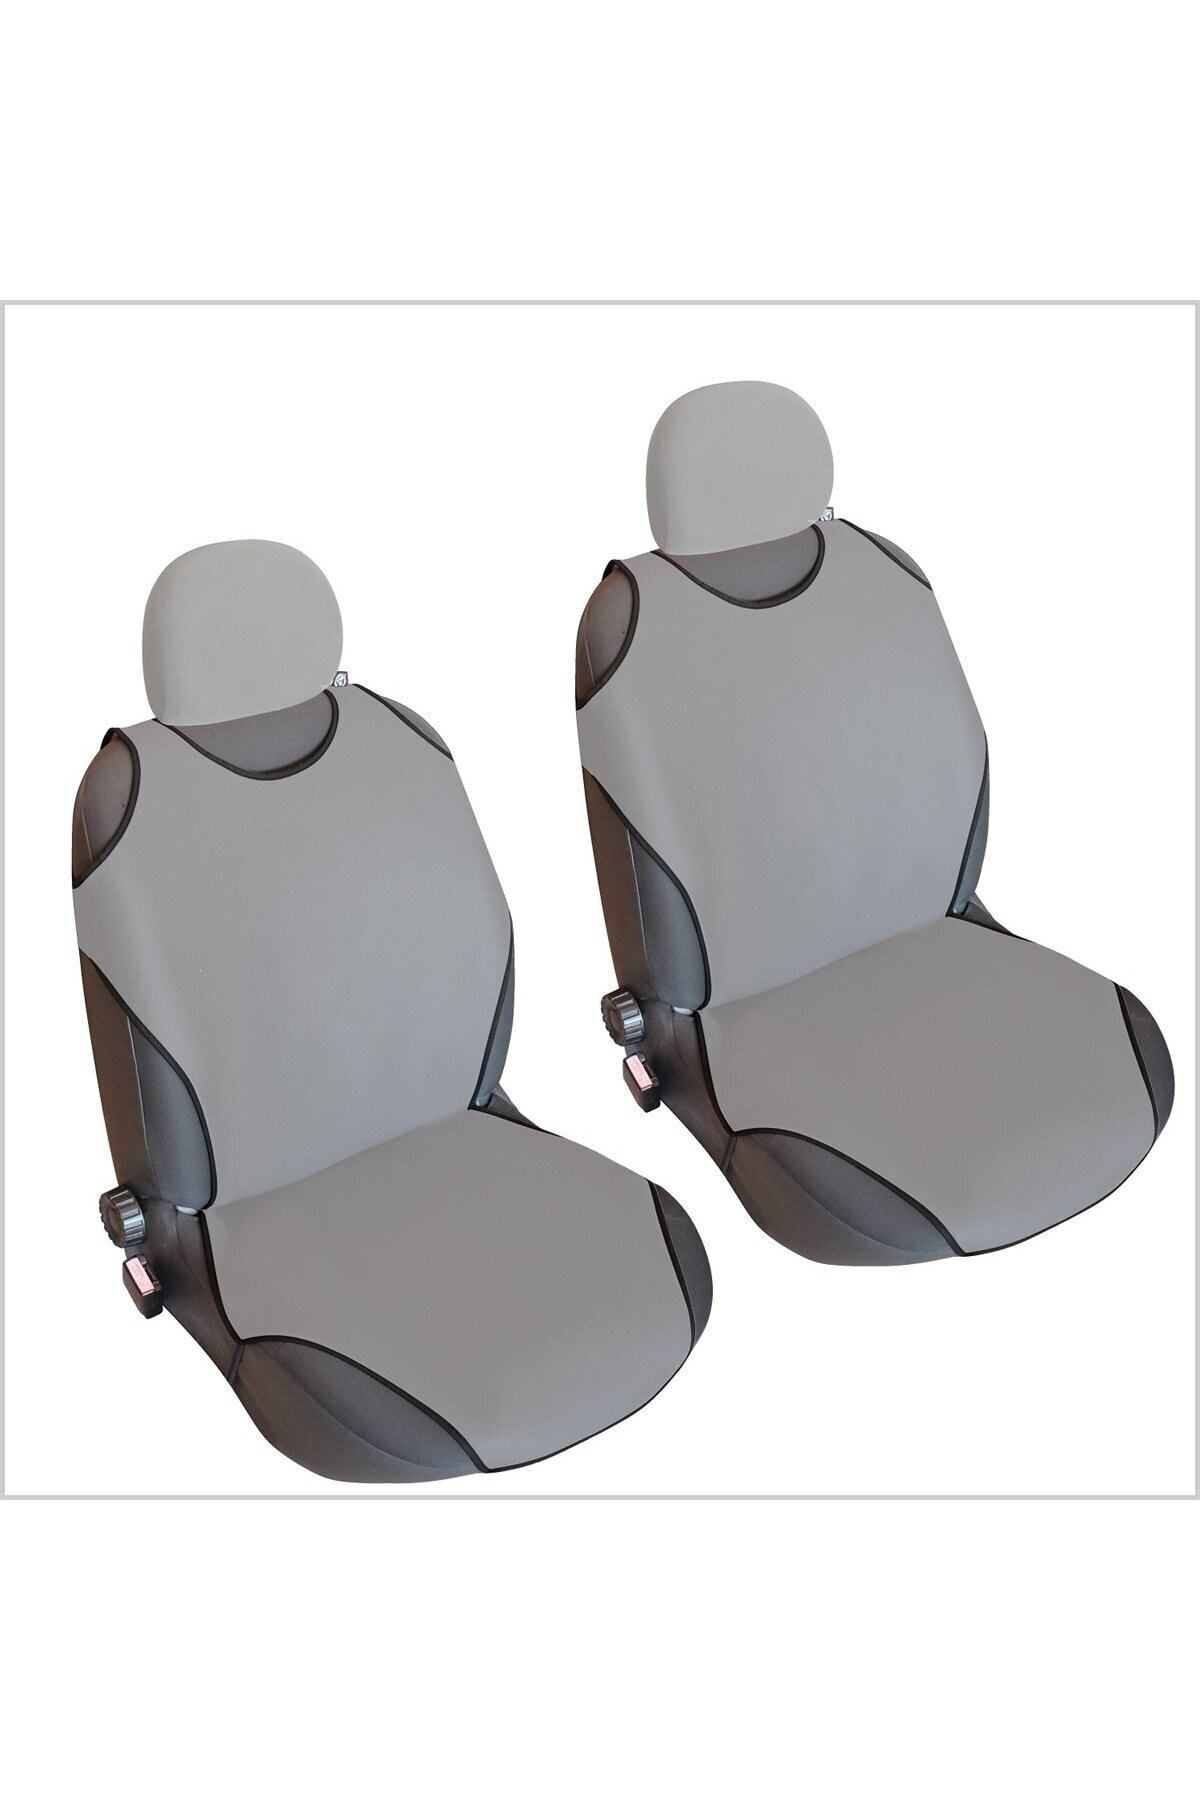 ZMR OTO AKSESUAR Nissan Qashqai Car Seat Cover Athlete Model 2-Piece - Gray  - Trendyol